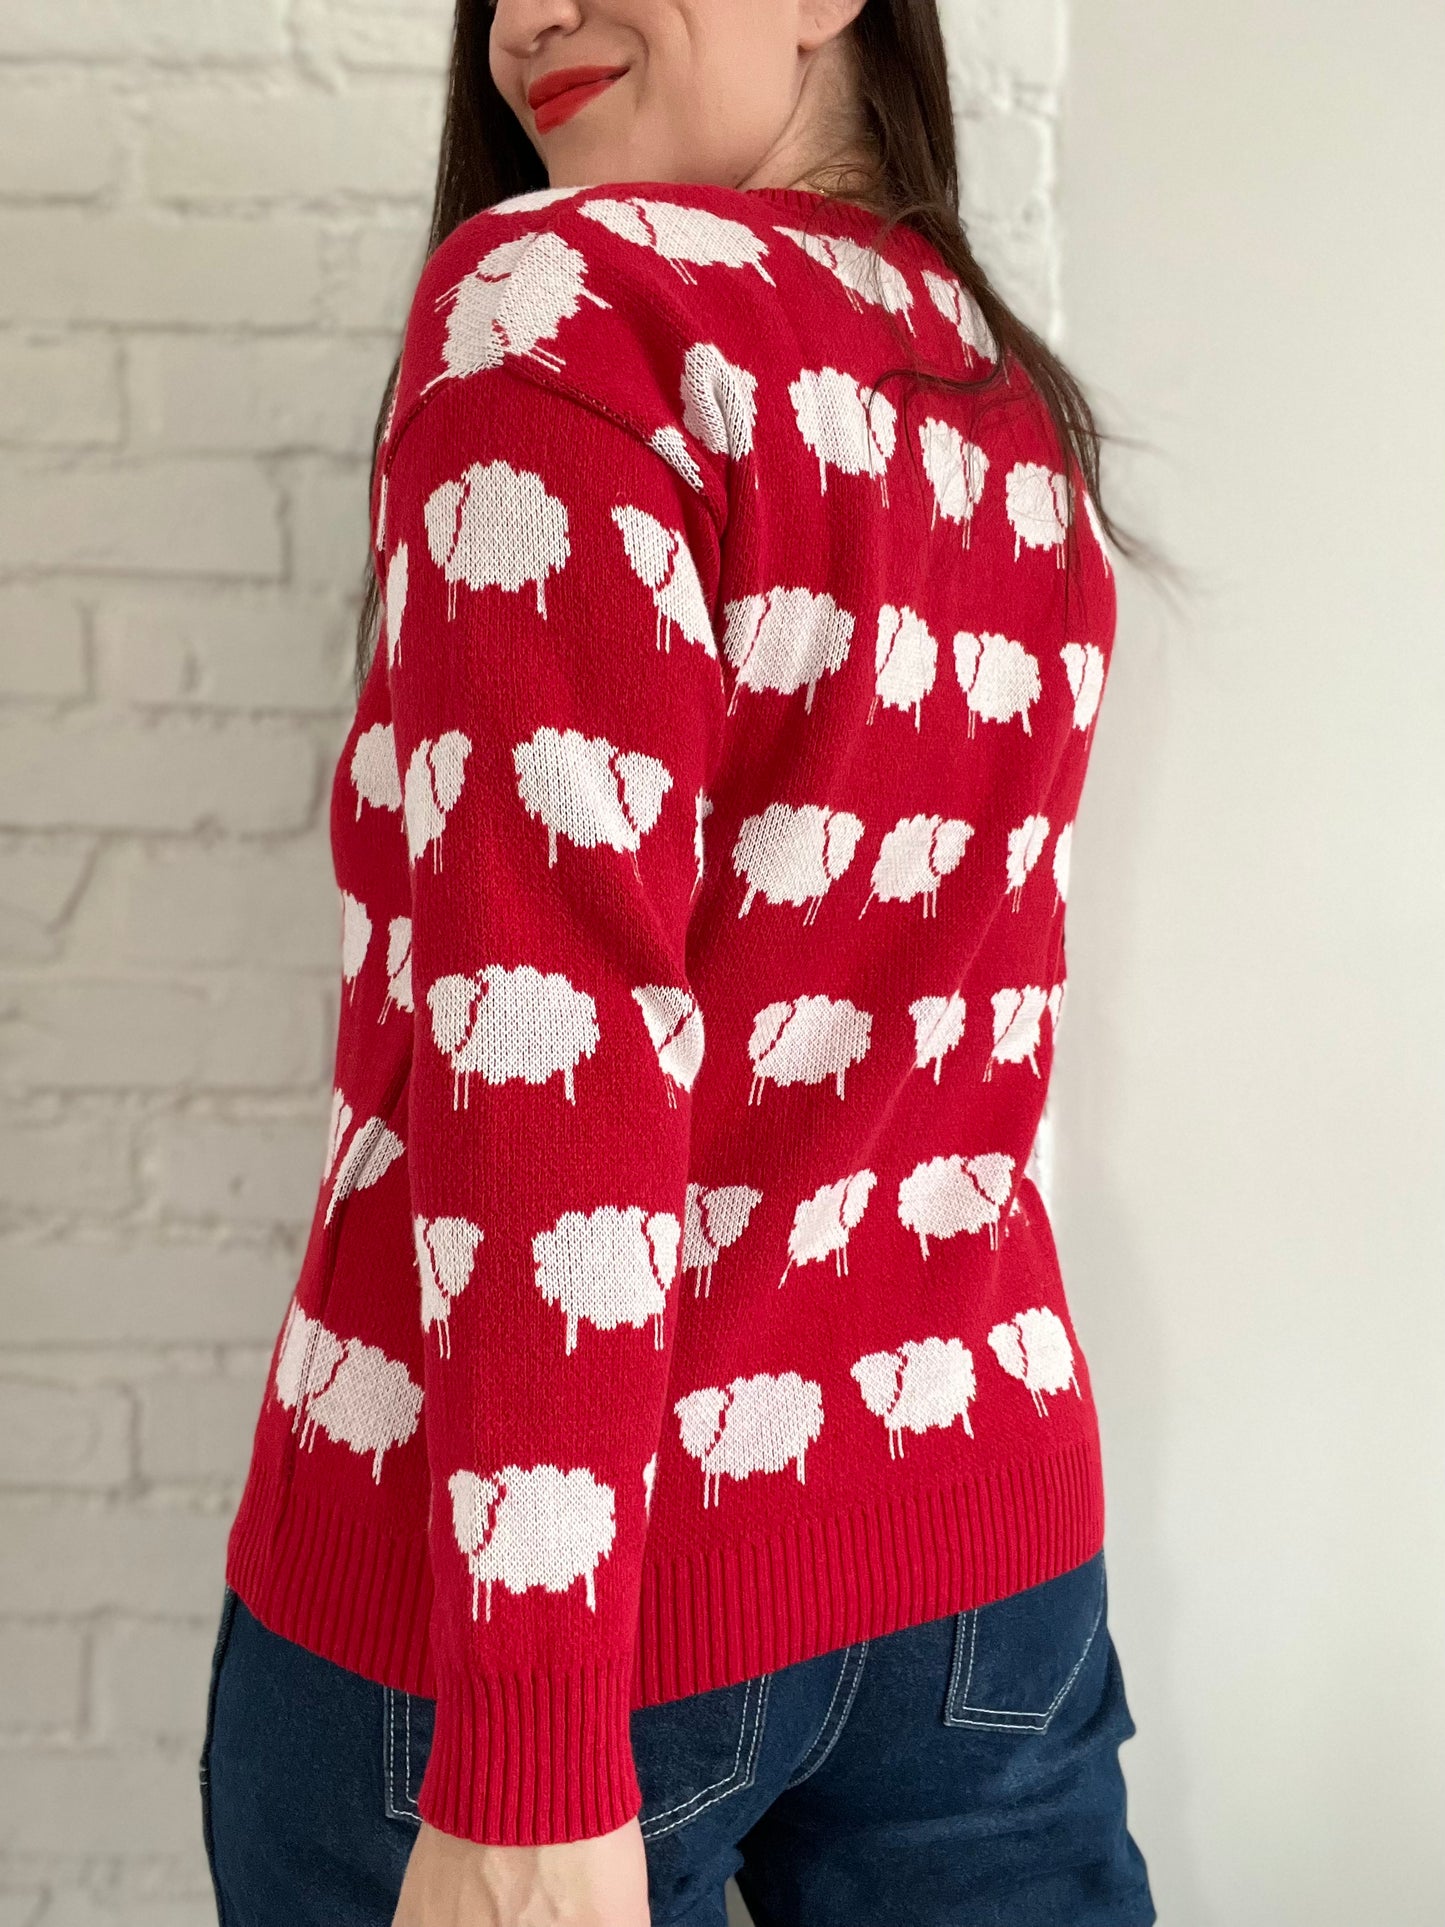 Princess "D" Sheep Inspired Sweater - M